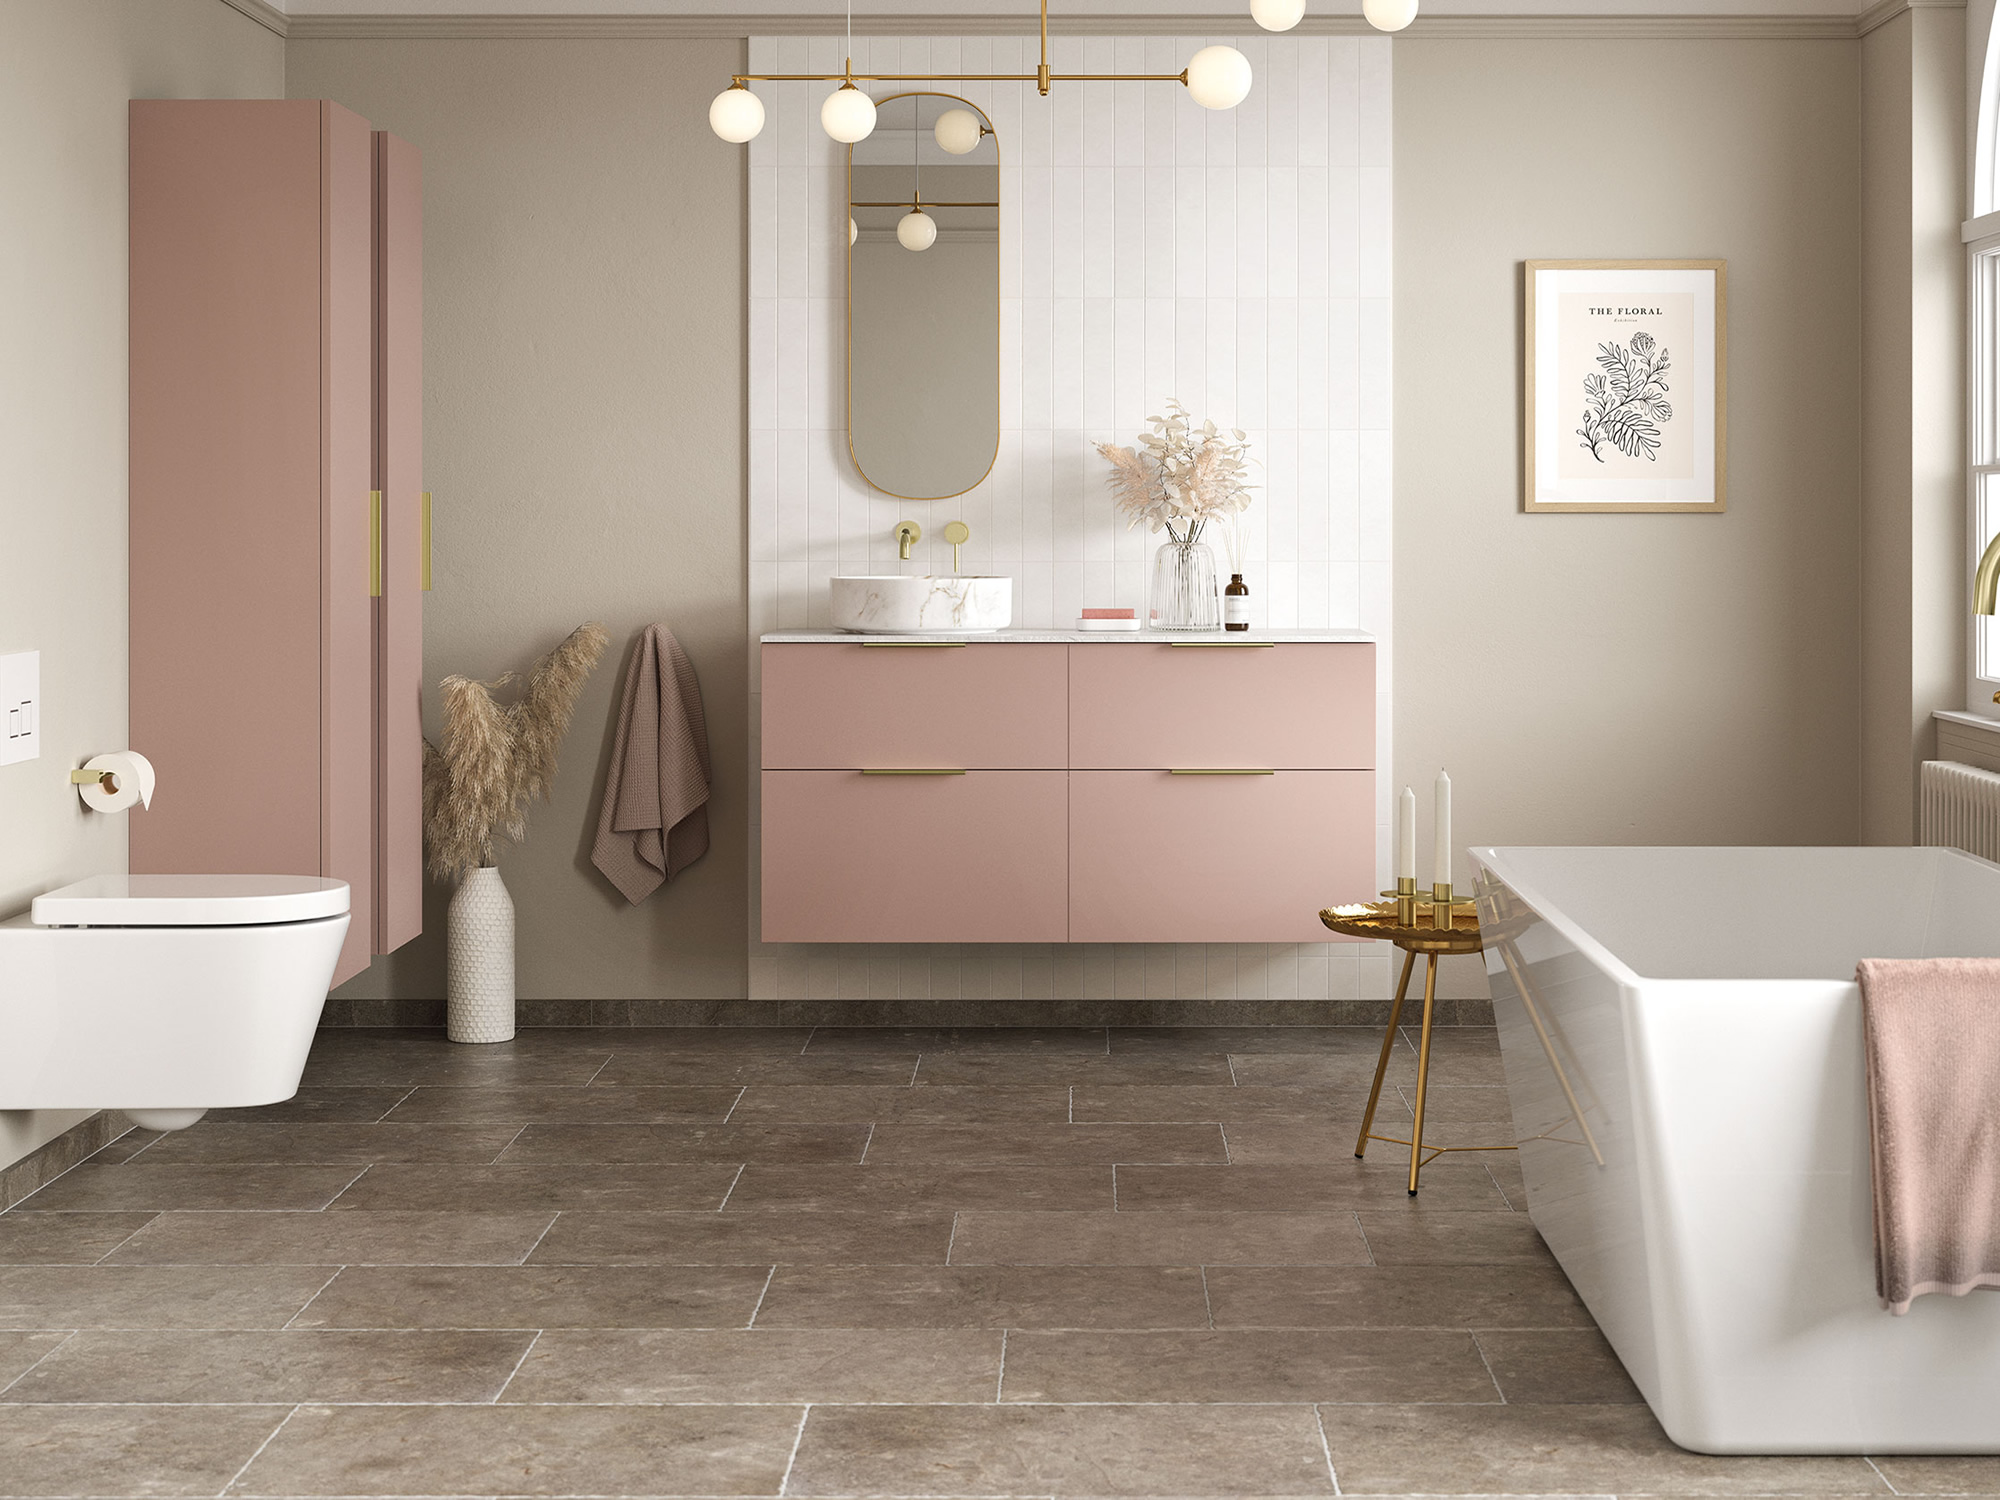 Design Apri Indigo Bathroom